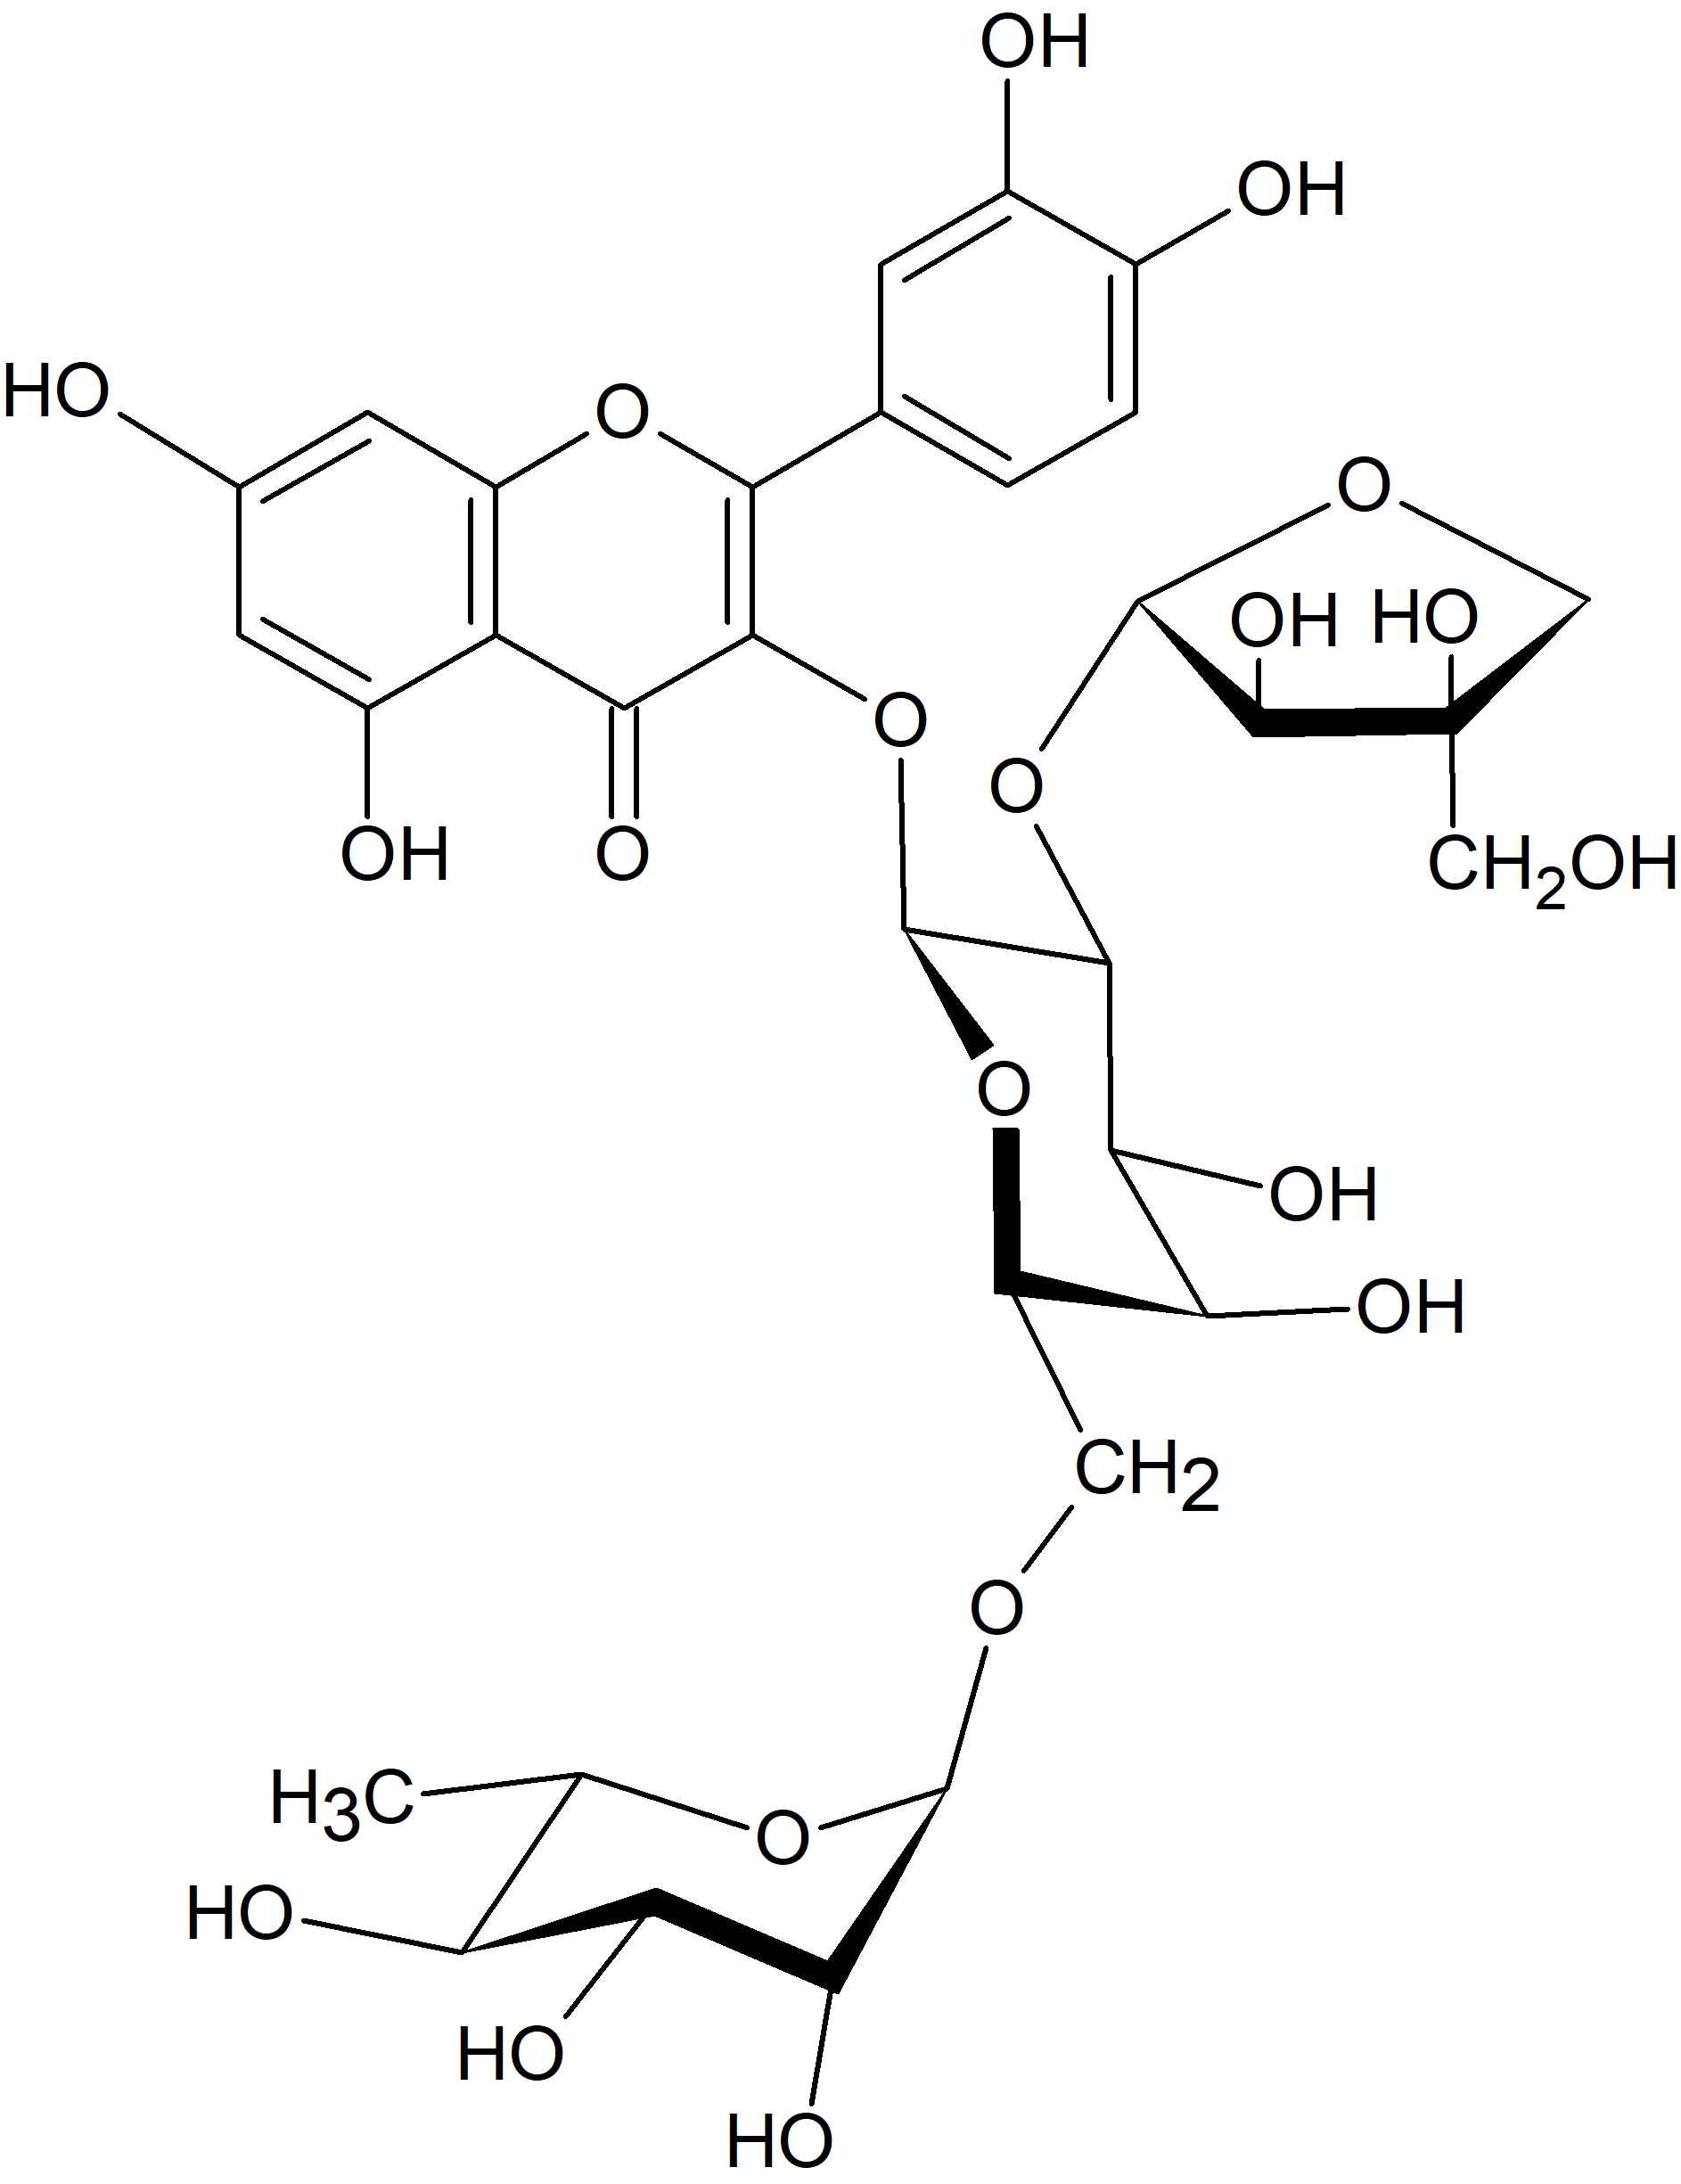 Quercetin 3-O-apiosyl-(1→2)-[rhamnosyl-(1→6)-galactoside]